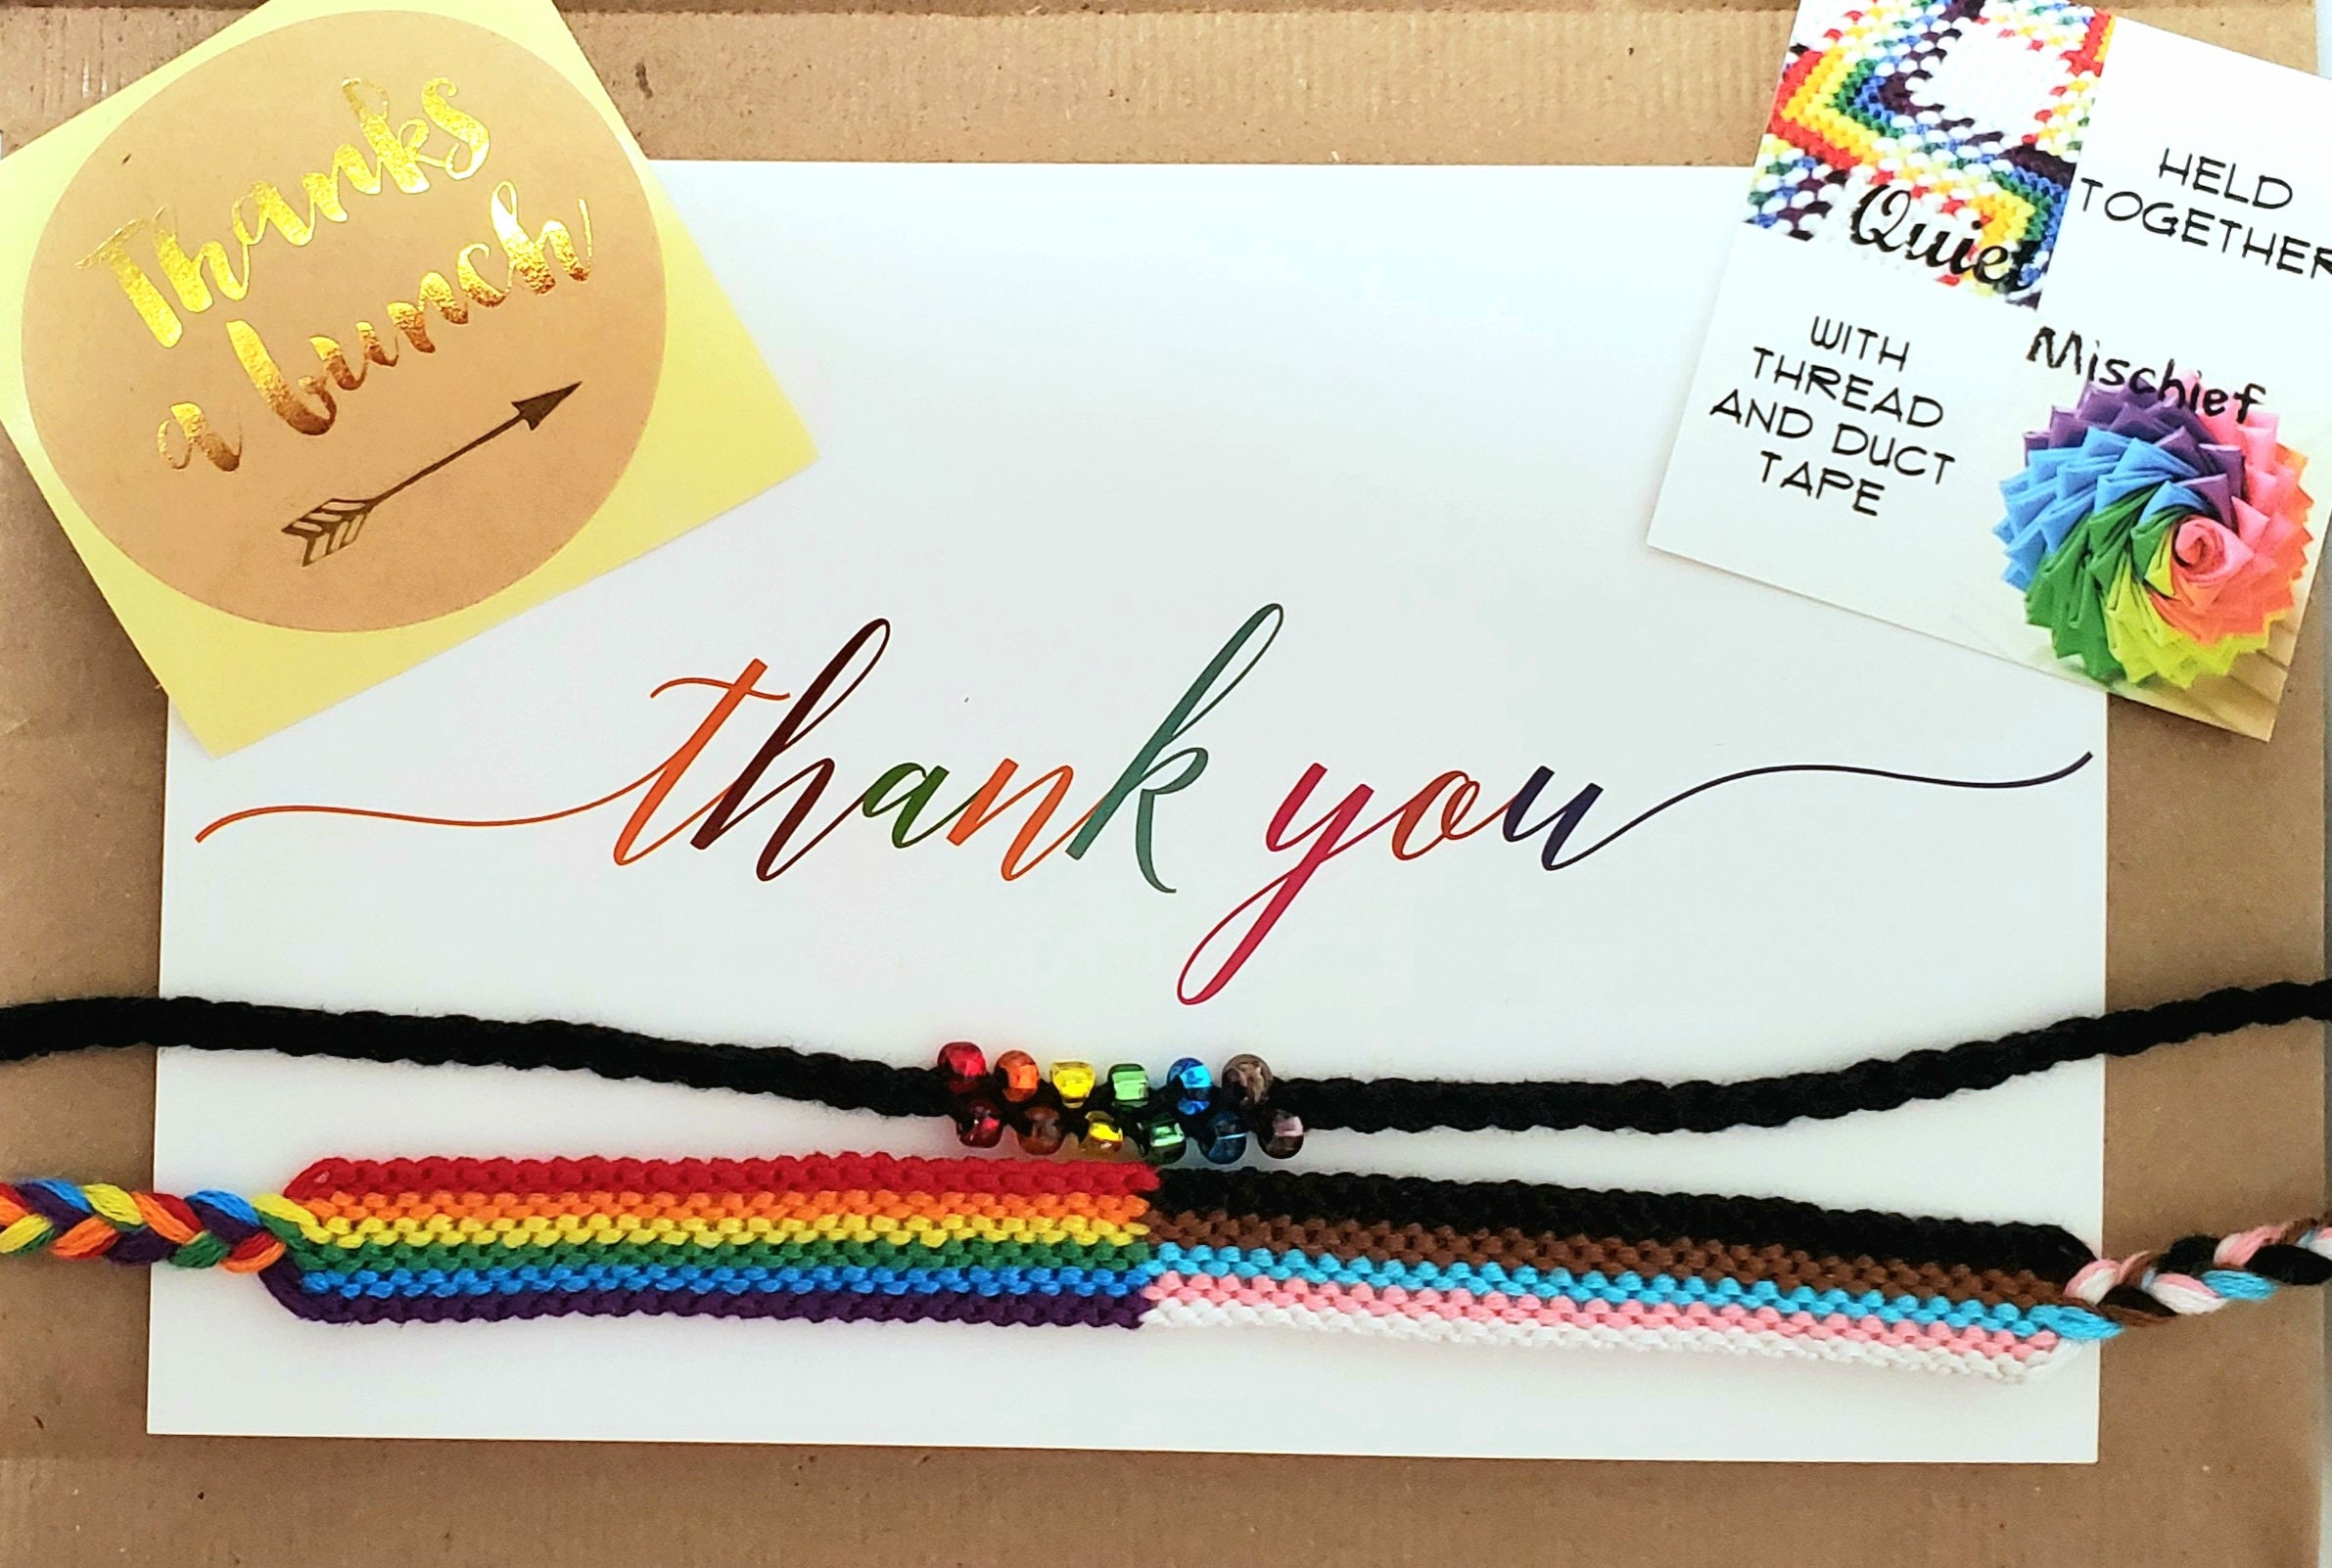 Kids Craft: Rainbow Friendship Bracelets